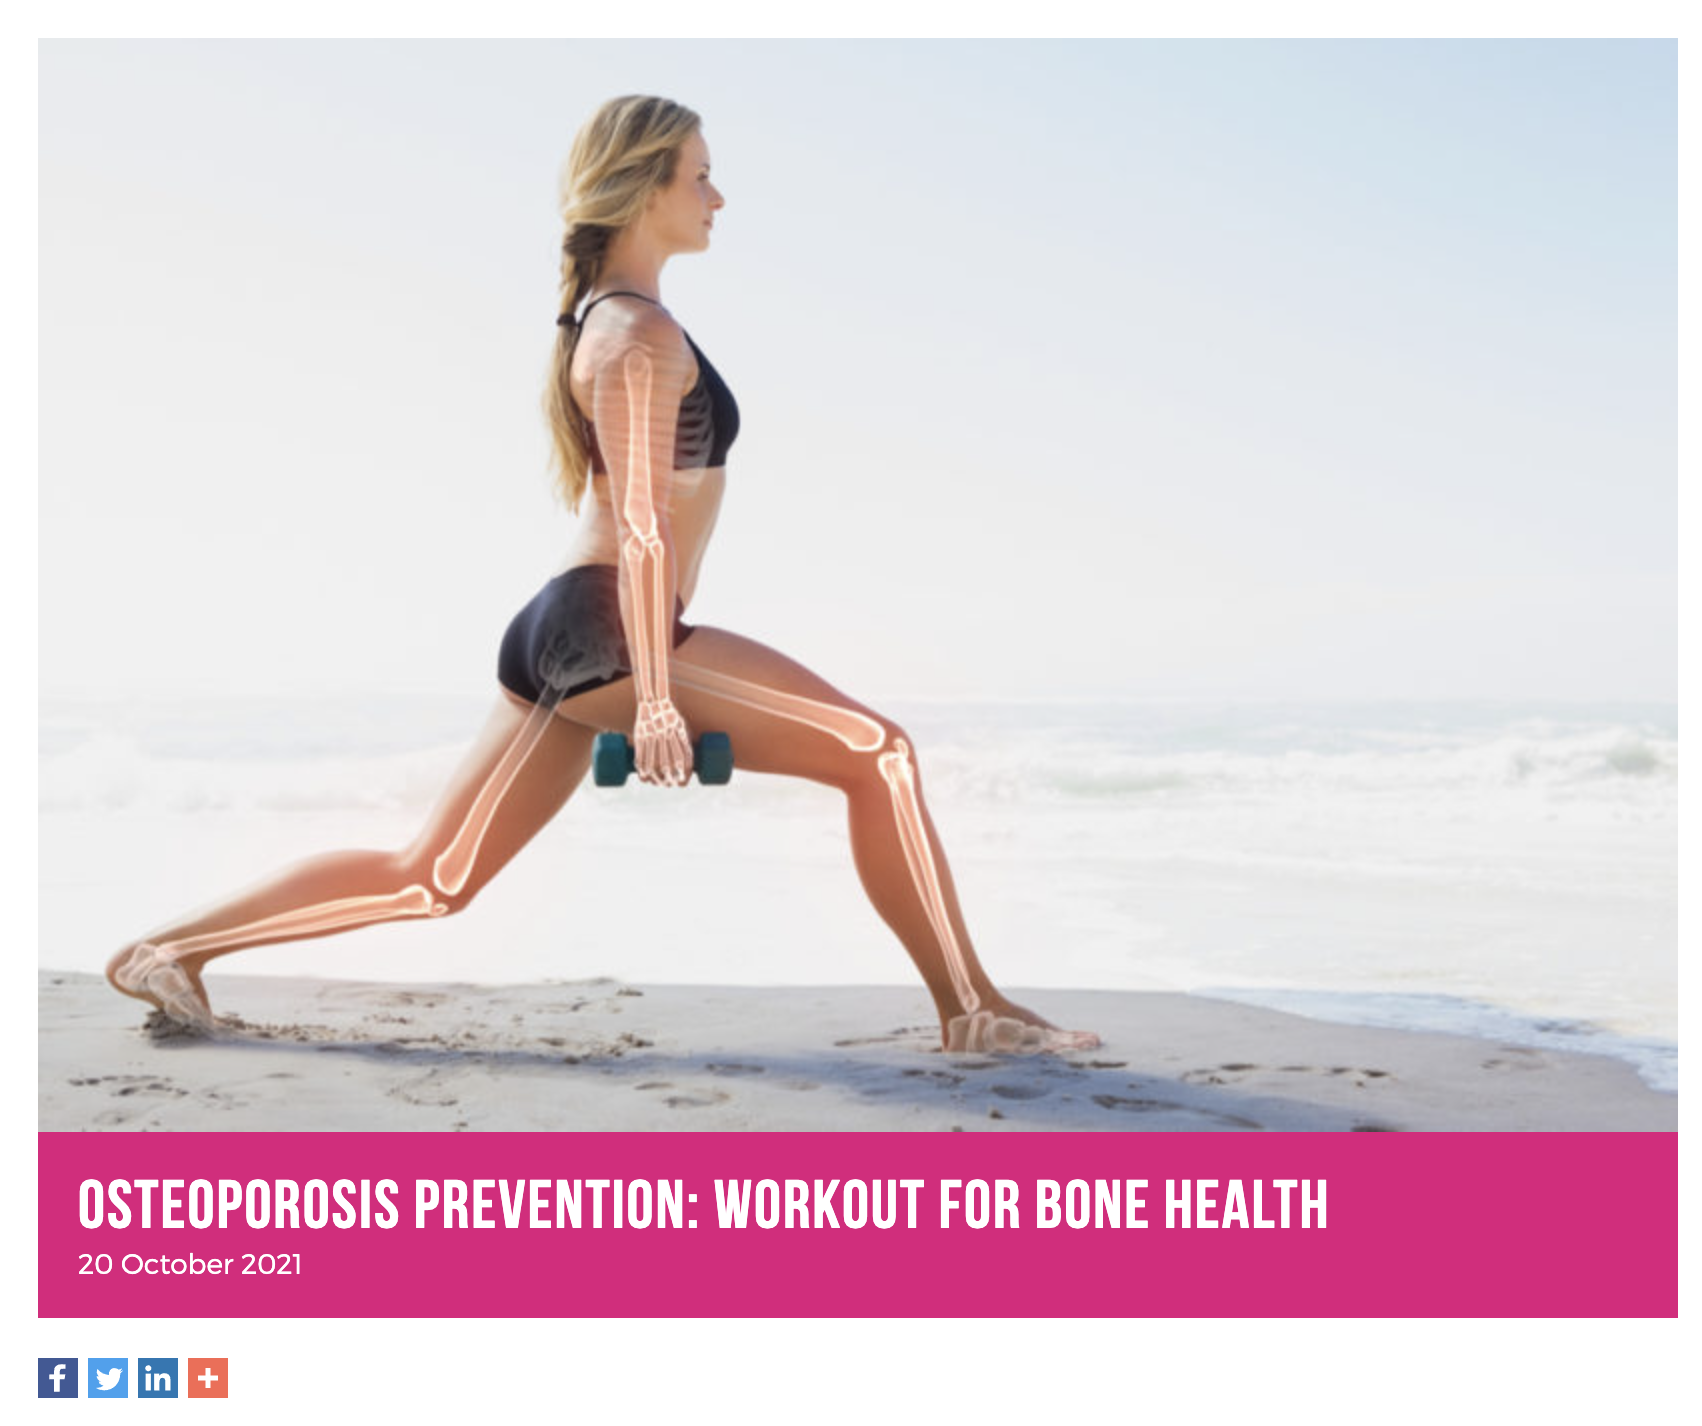 Women's Fitness Article by Caroline Idiens